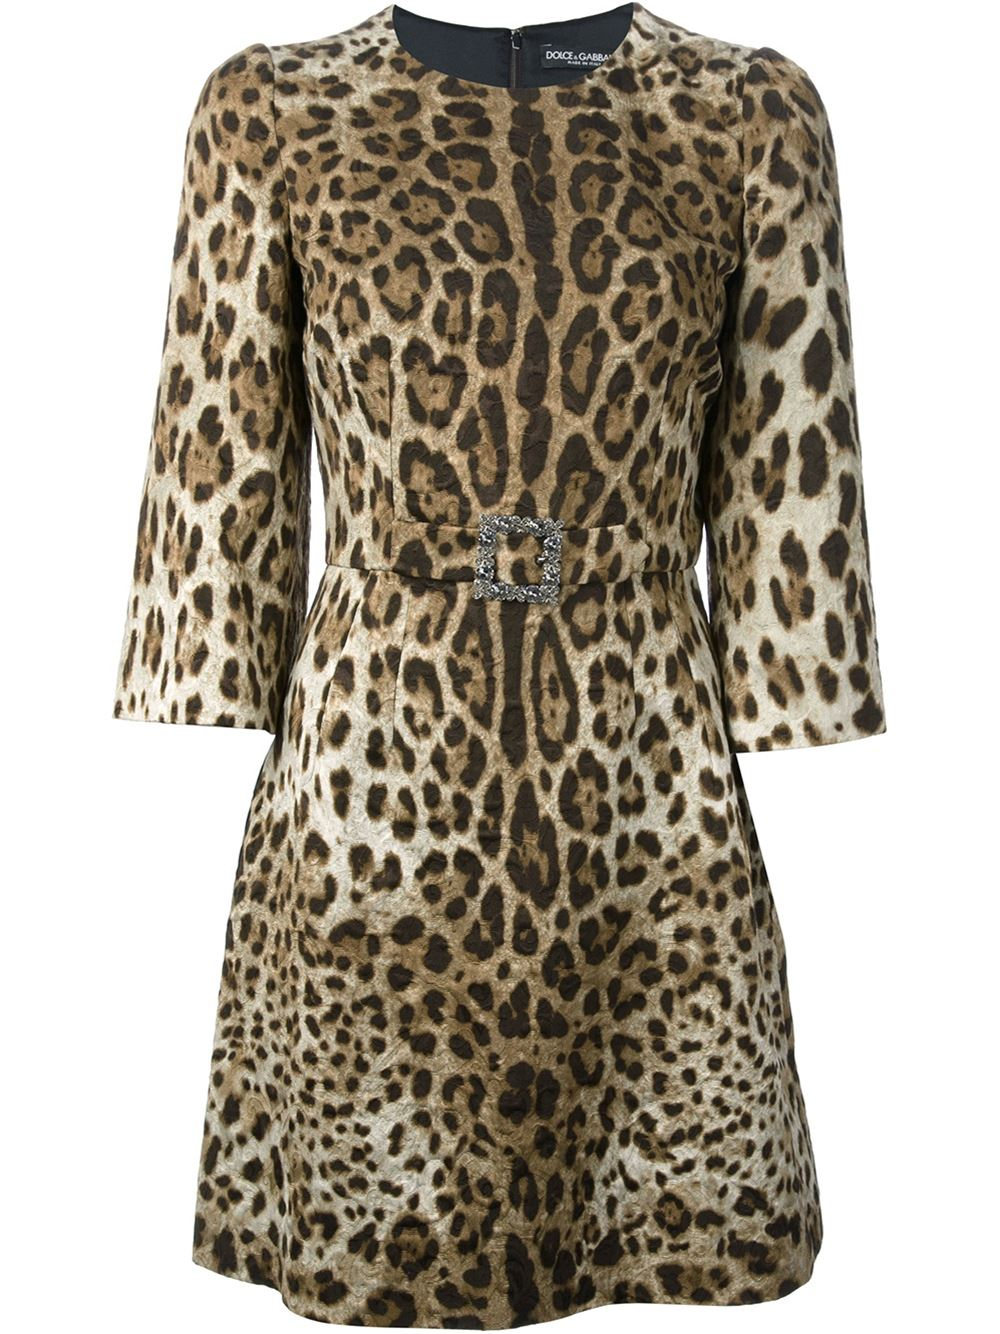 Dolce & gabbana Leopard Print Dress in Brown | Lyst